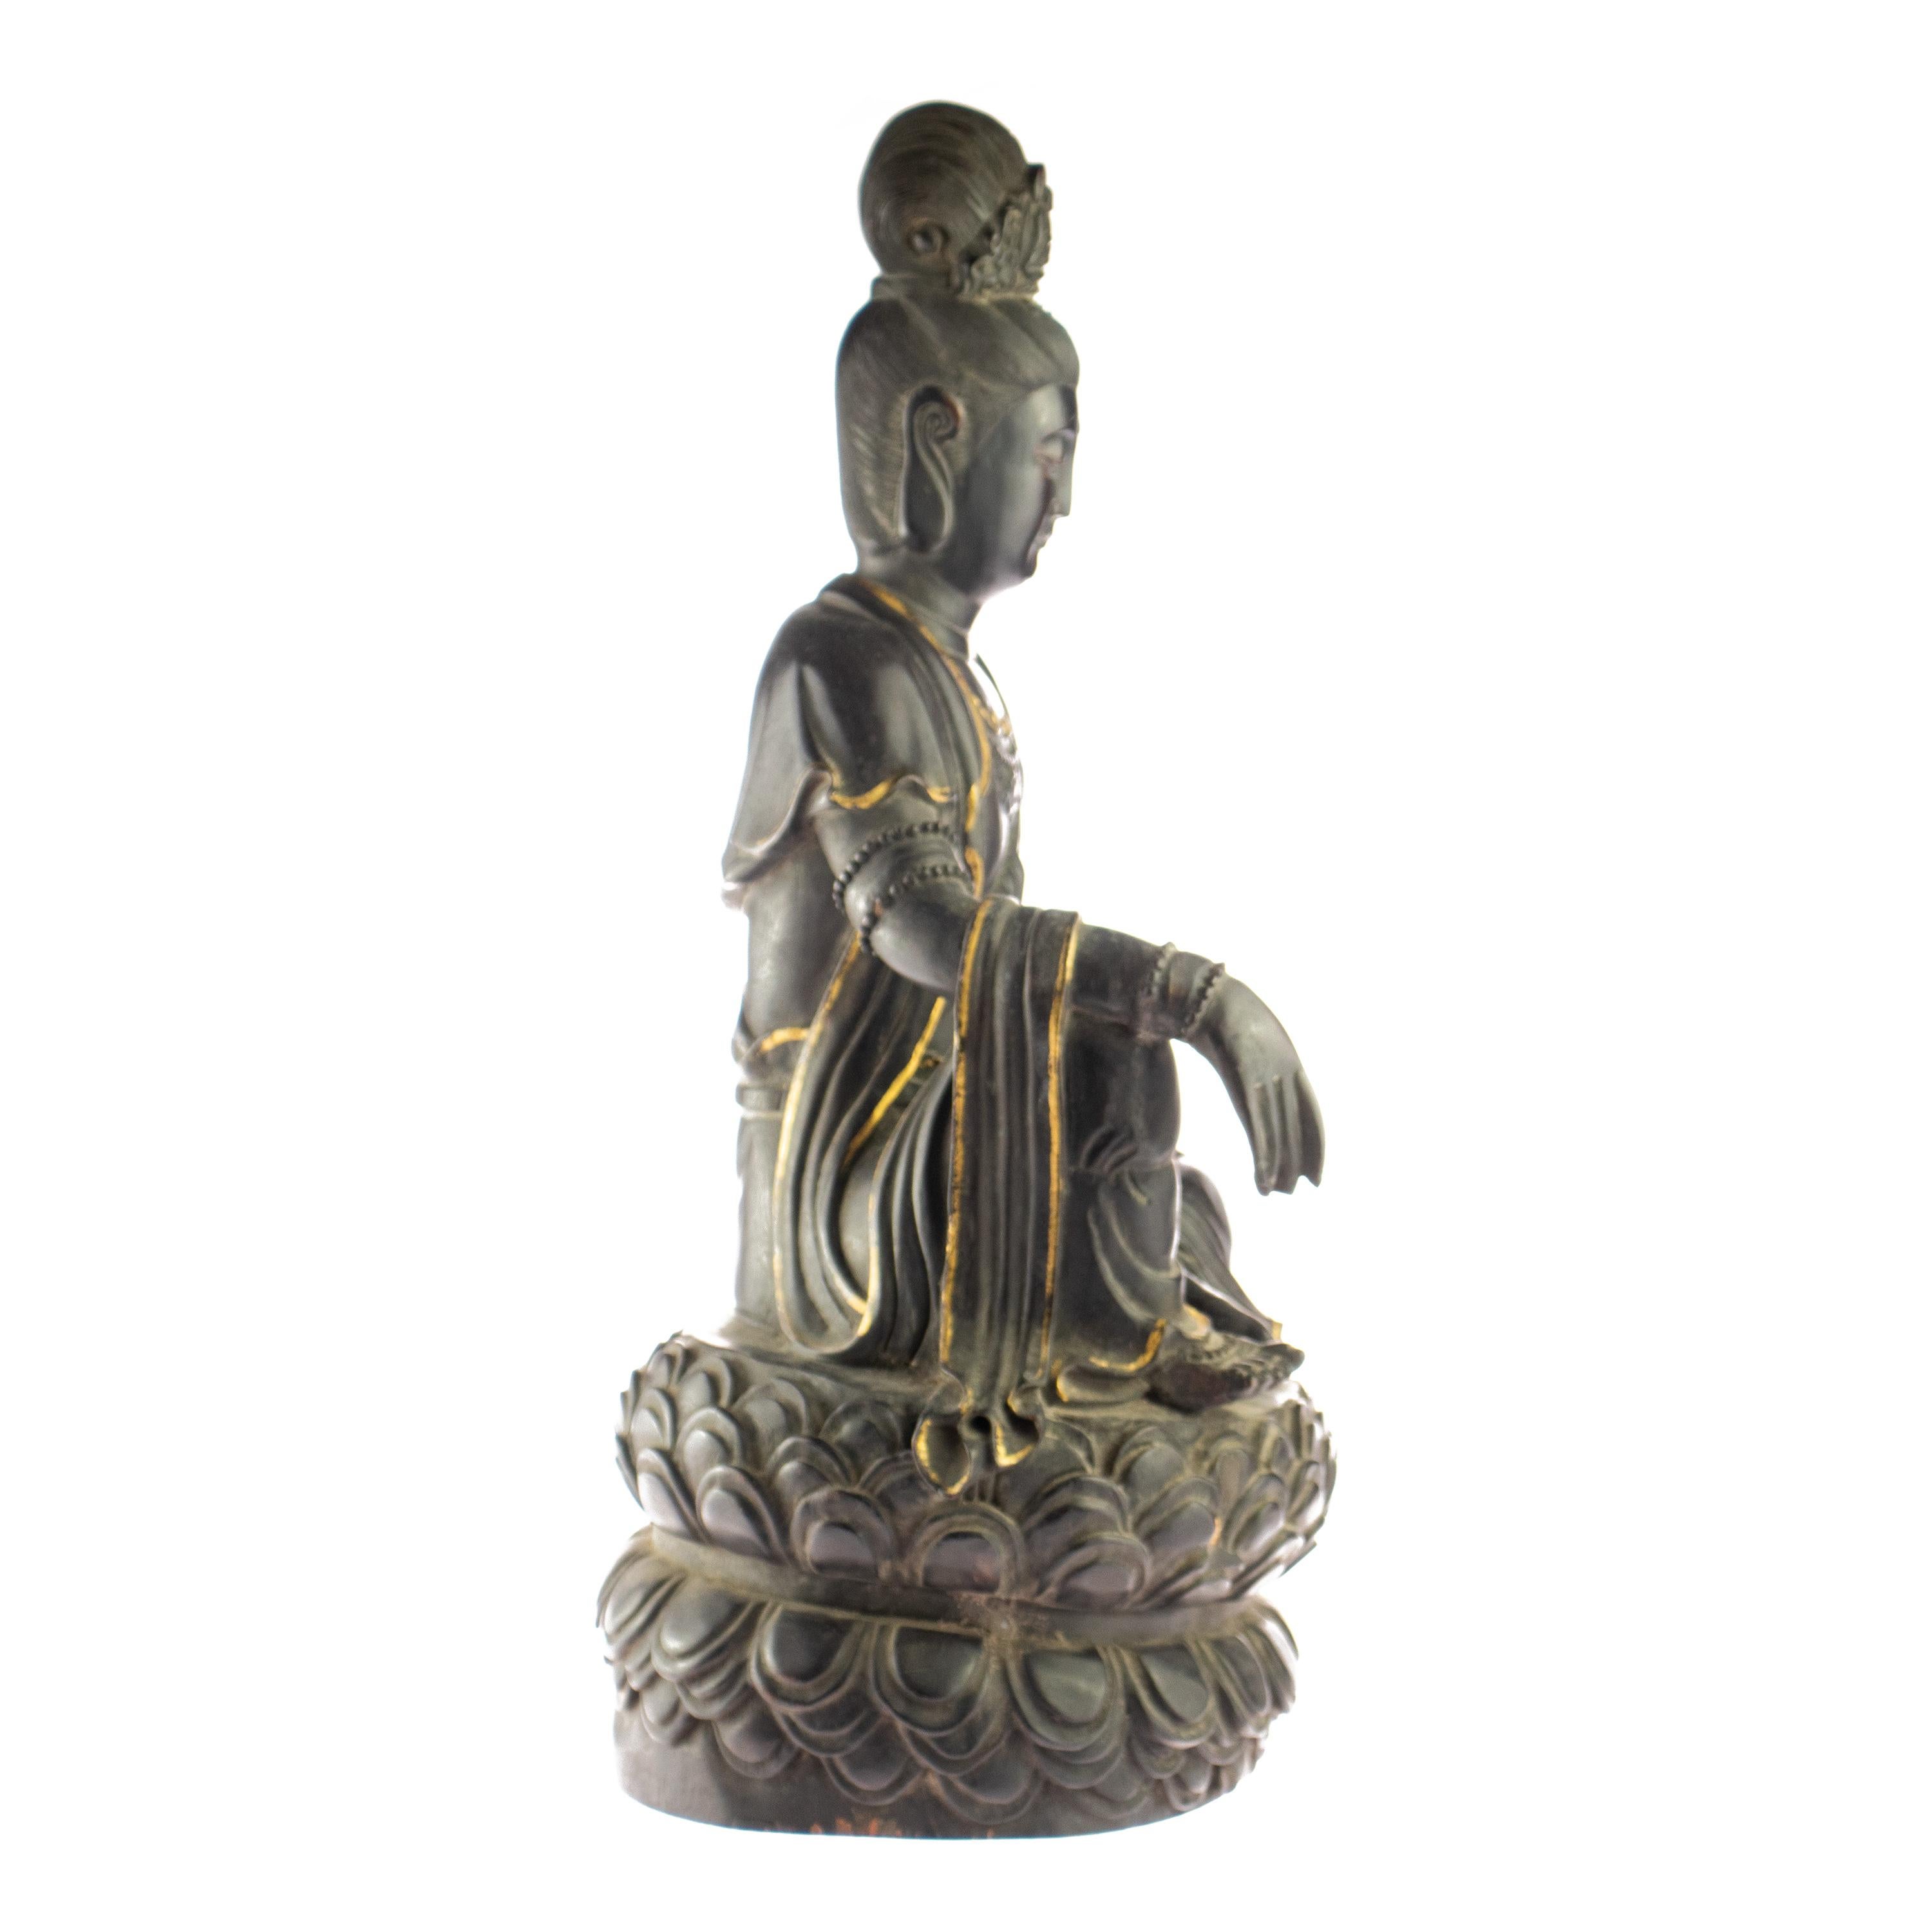 Chinese Export Wood Guanyin Bodhisattva Female Buddha Asian Handmade Carved Statue Sculpture